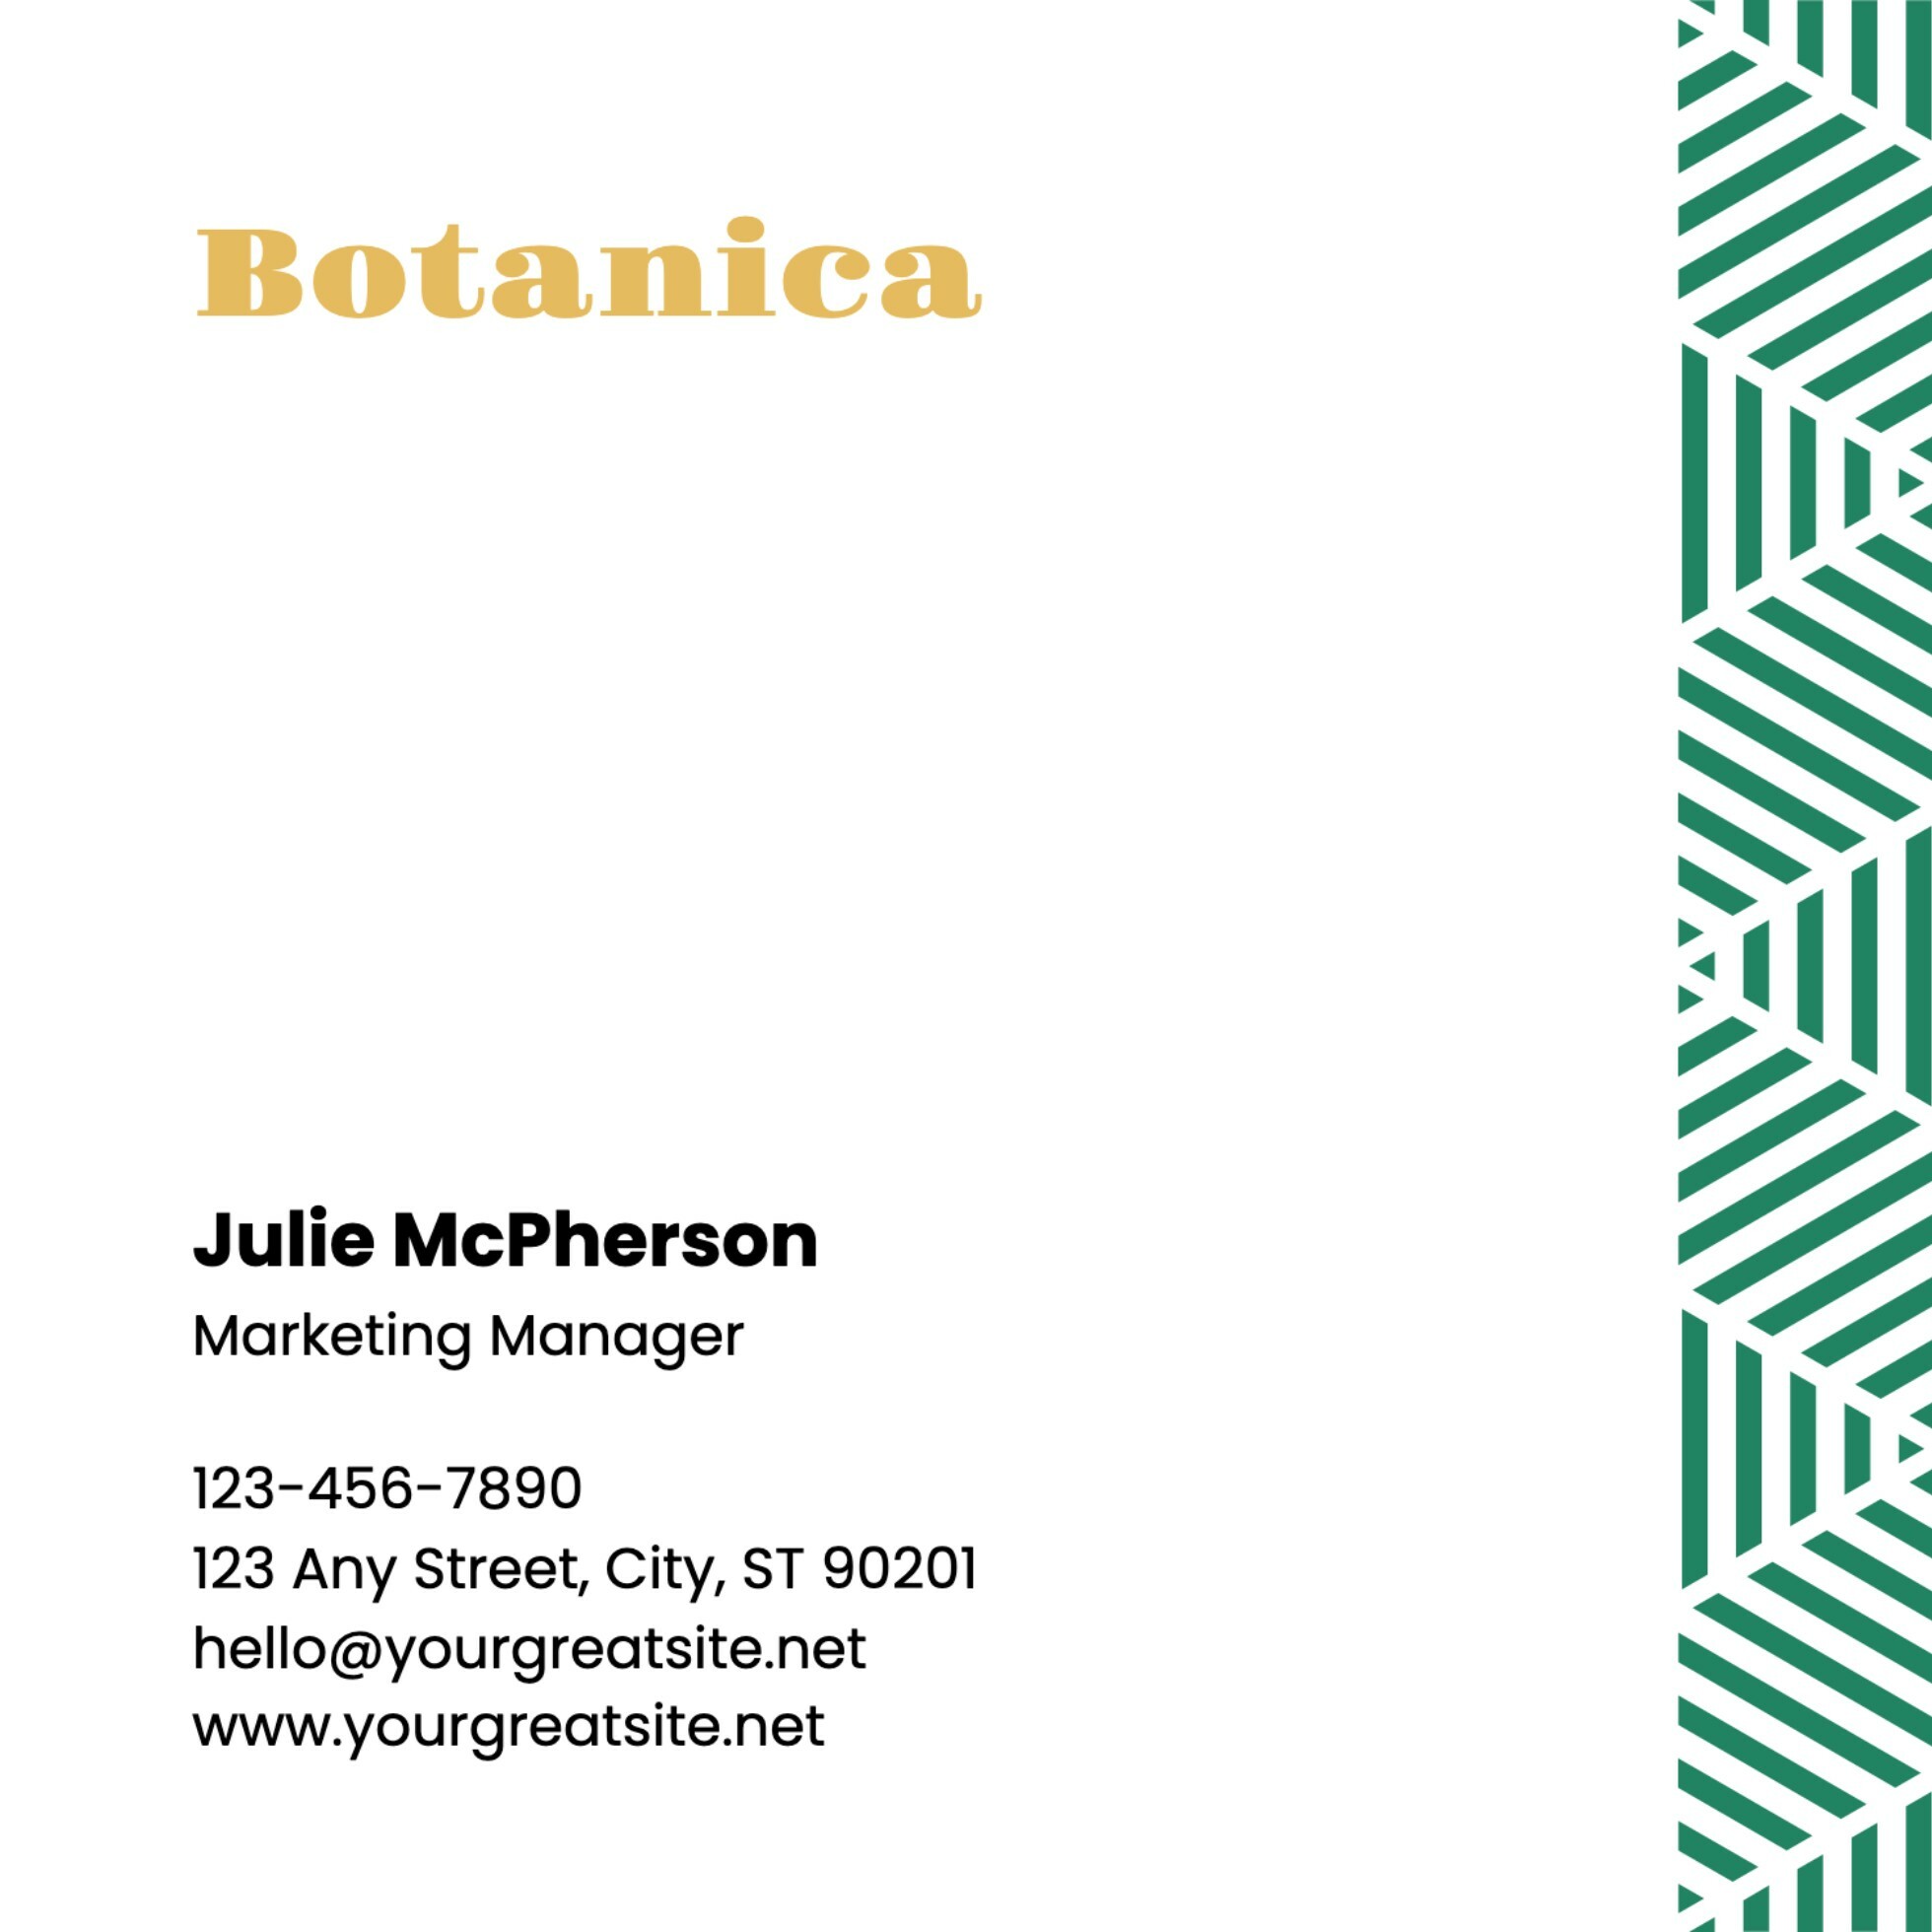 Botanic Business Card Template